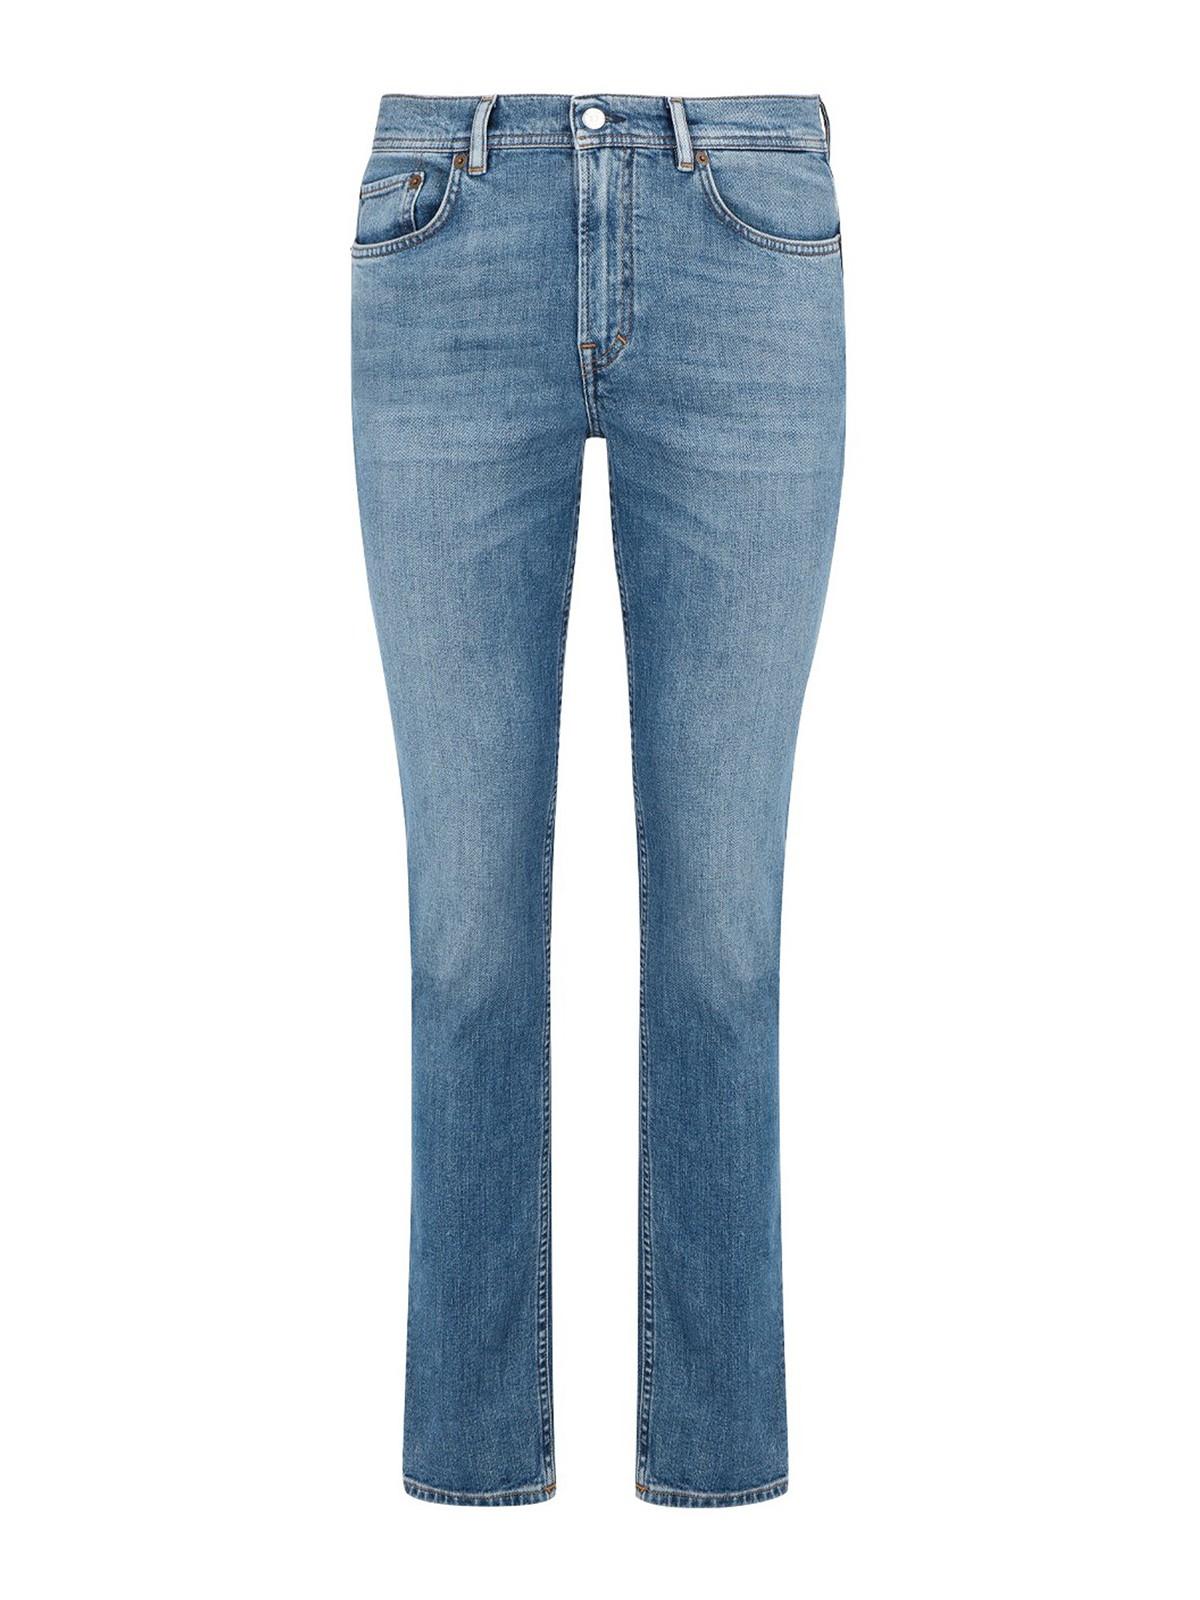 Acne Studios Cotton Denim Jeans in Blue for Men - Lyst